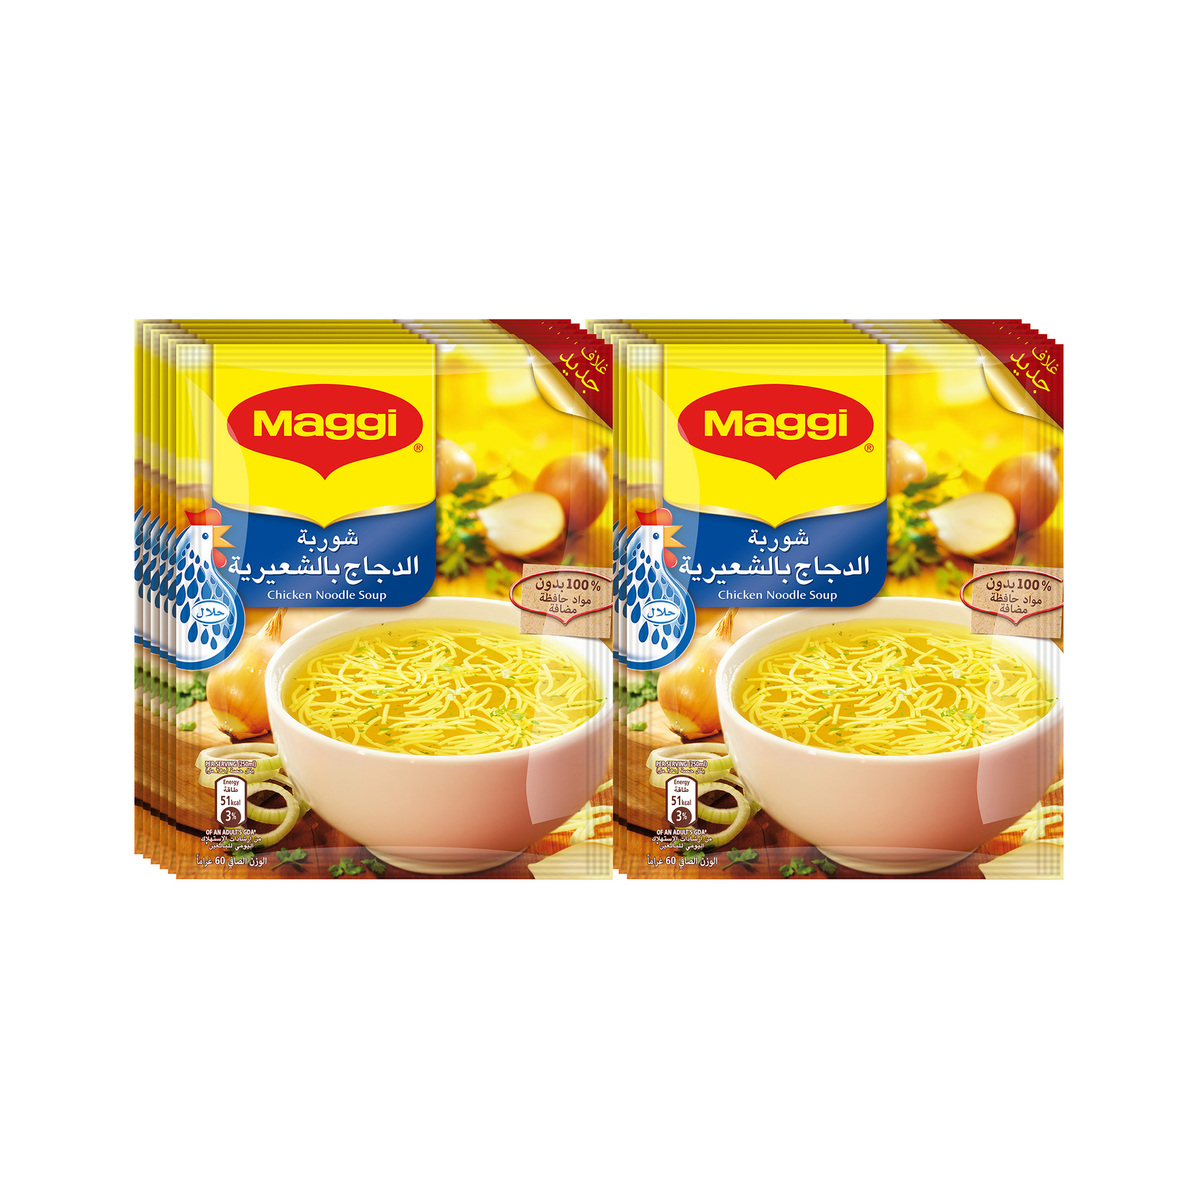 Maggi Chicken Noodle Soup 12 x 60g